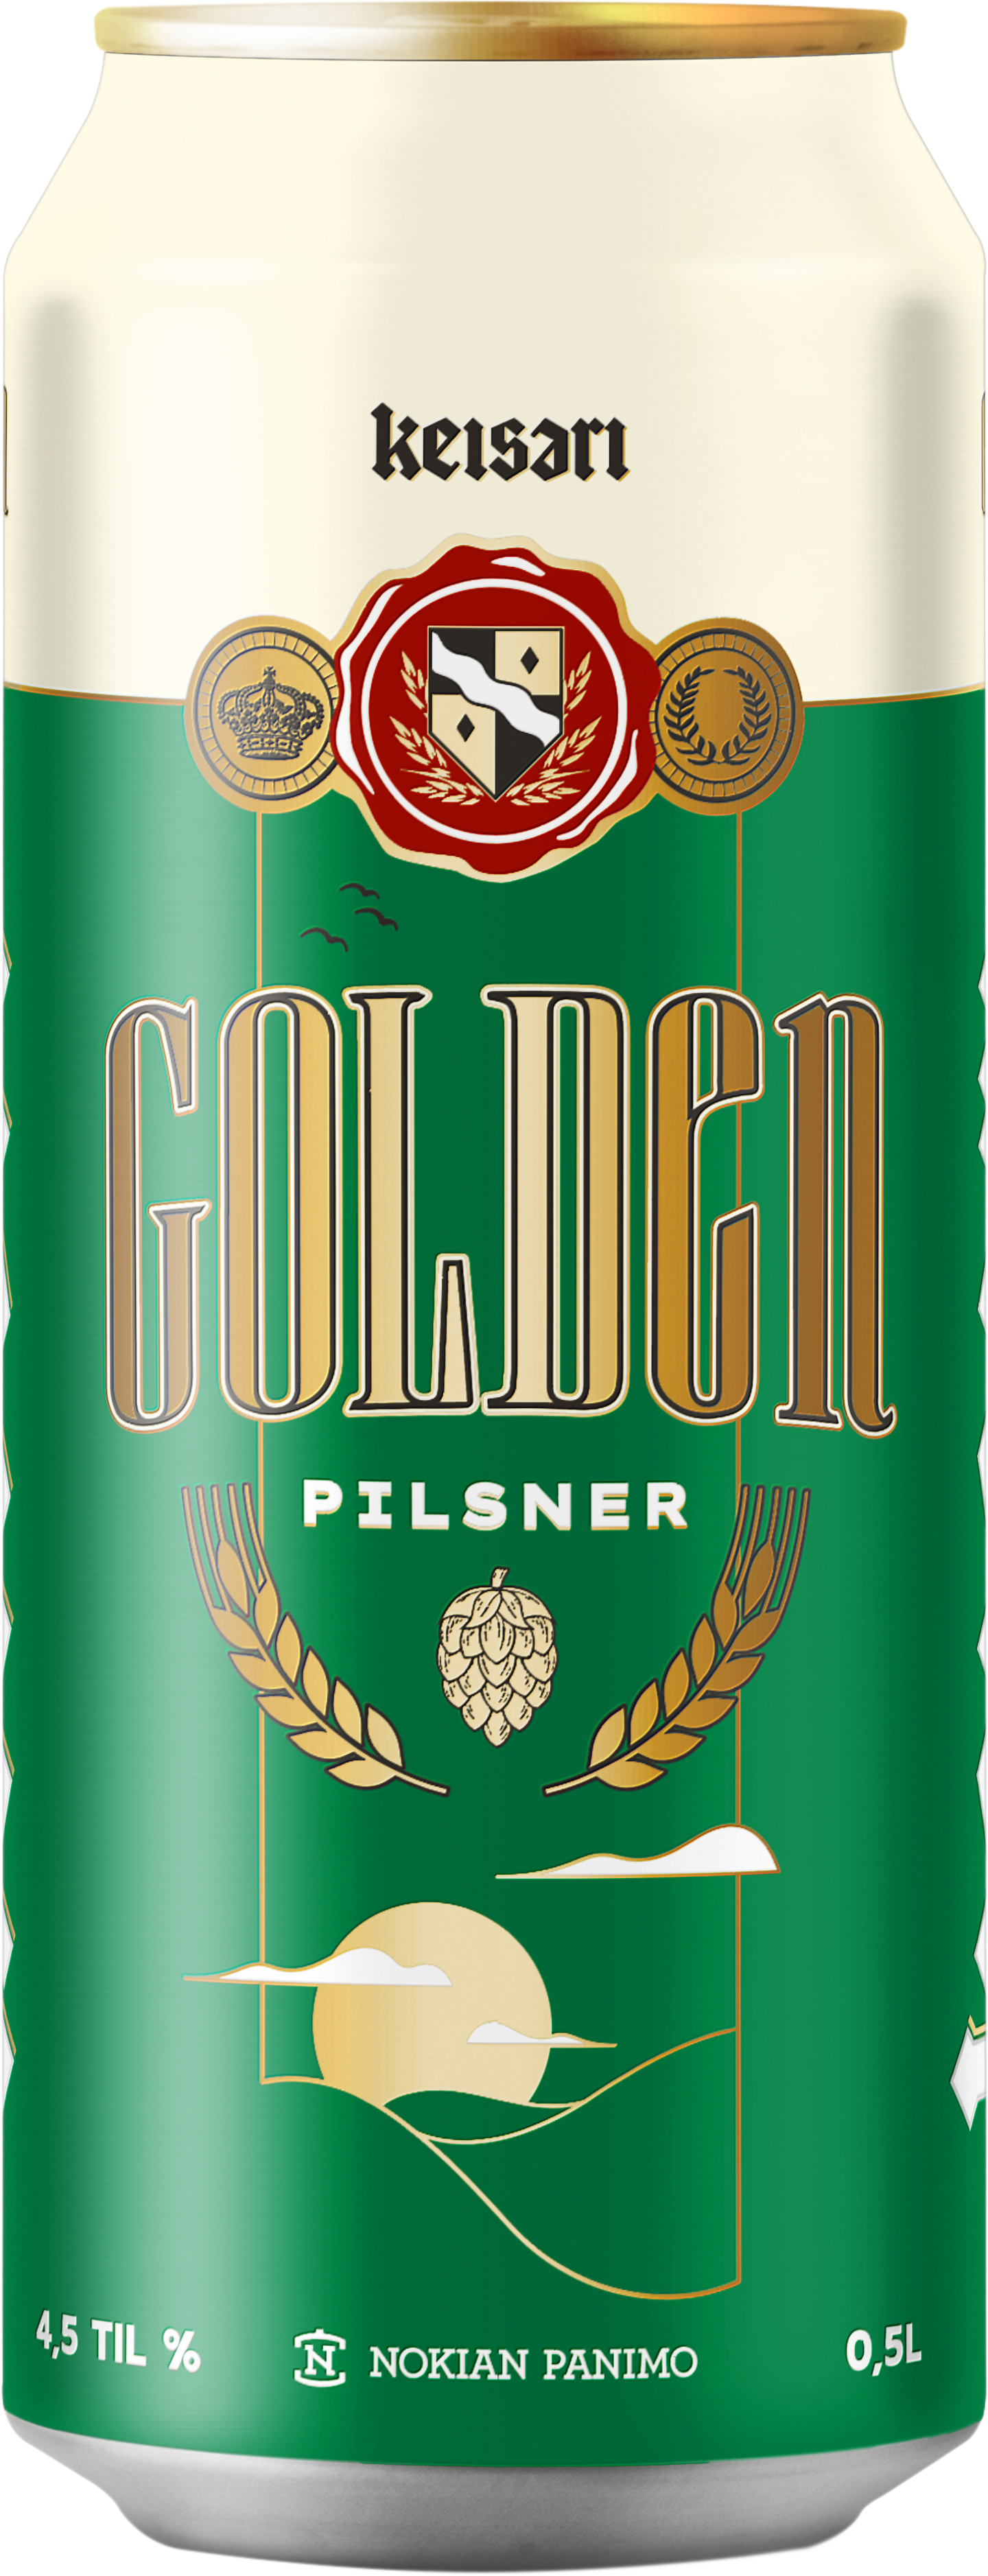 Keisari Golden Pilsner olut 4,5% 0,5l